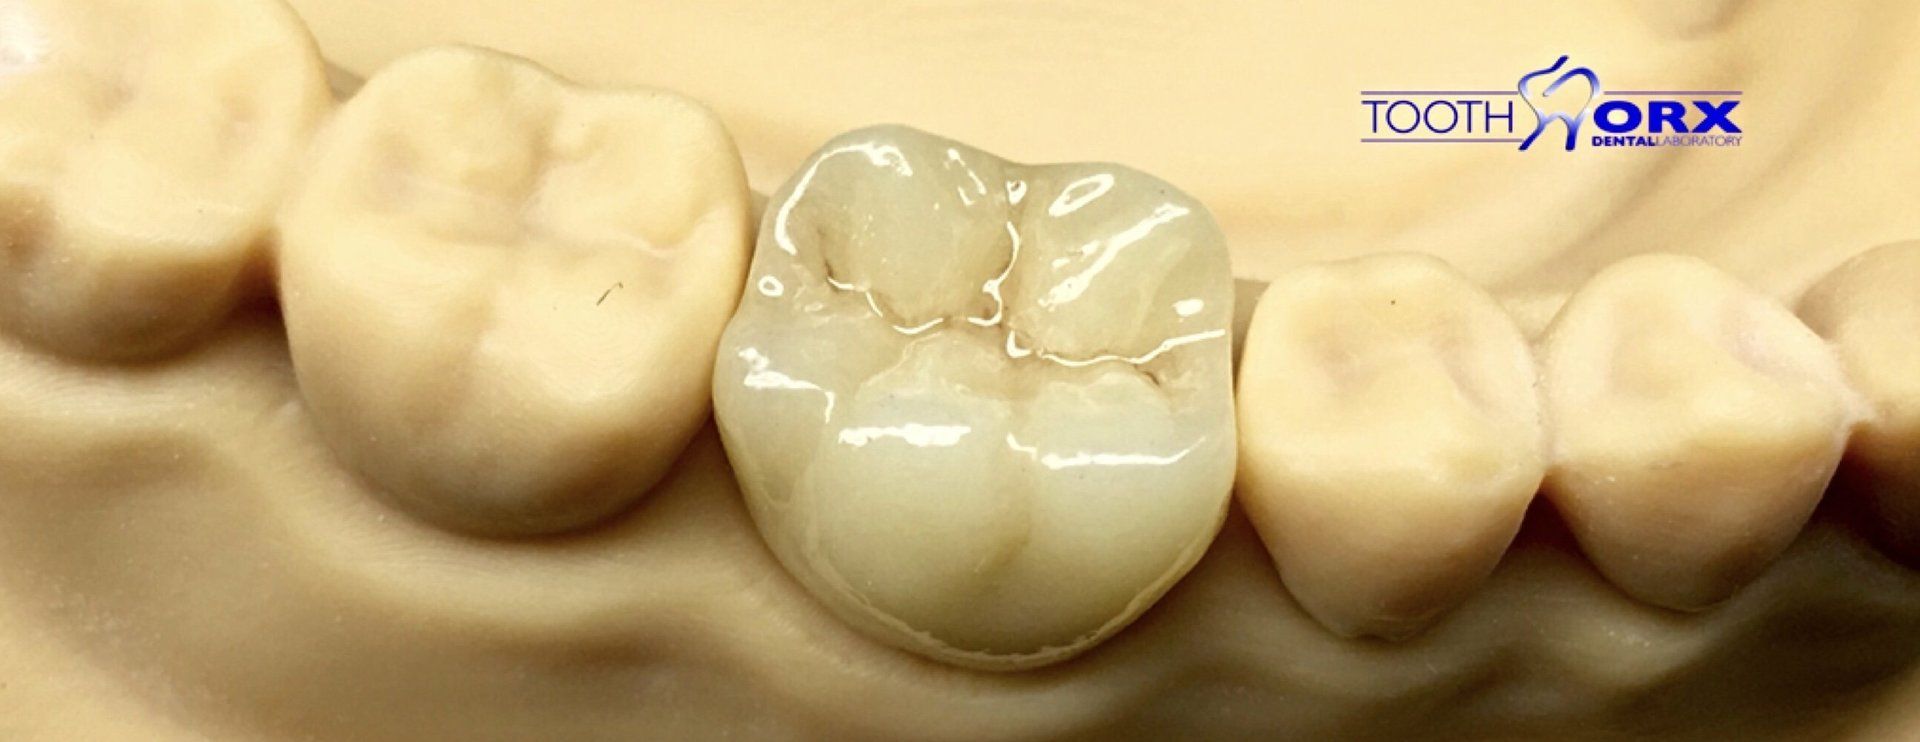 emax ivoclar crowns bridges cardiff dental dentistry